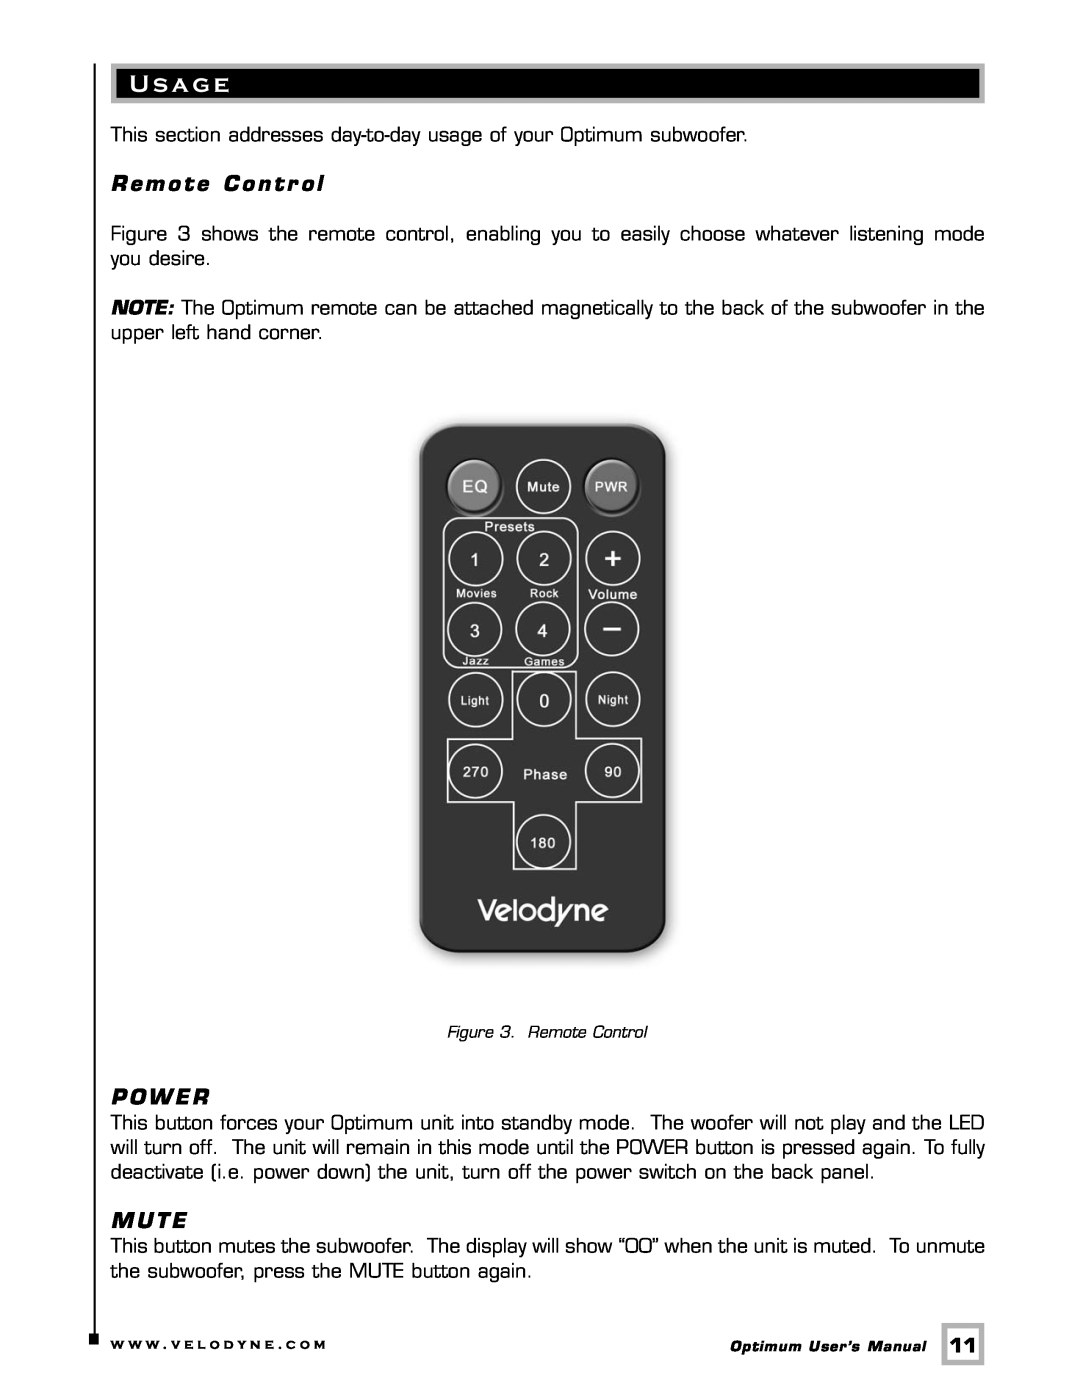 Velodyne Acoustics 8, 12, 10 user manual U s a ge, Remote Contr ol, Power, Mute 